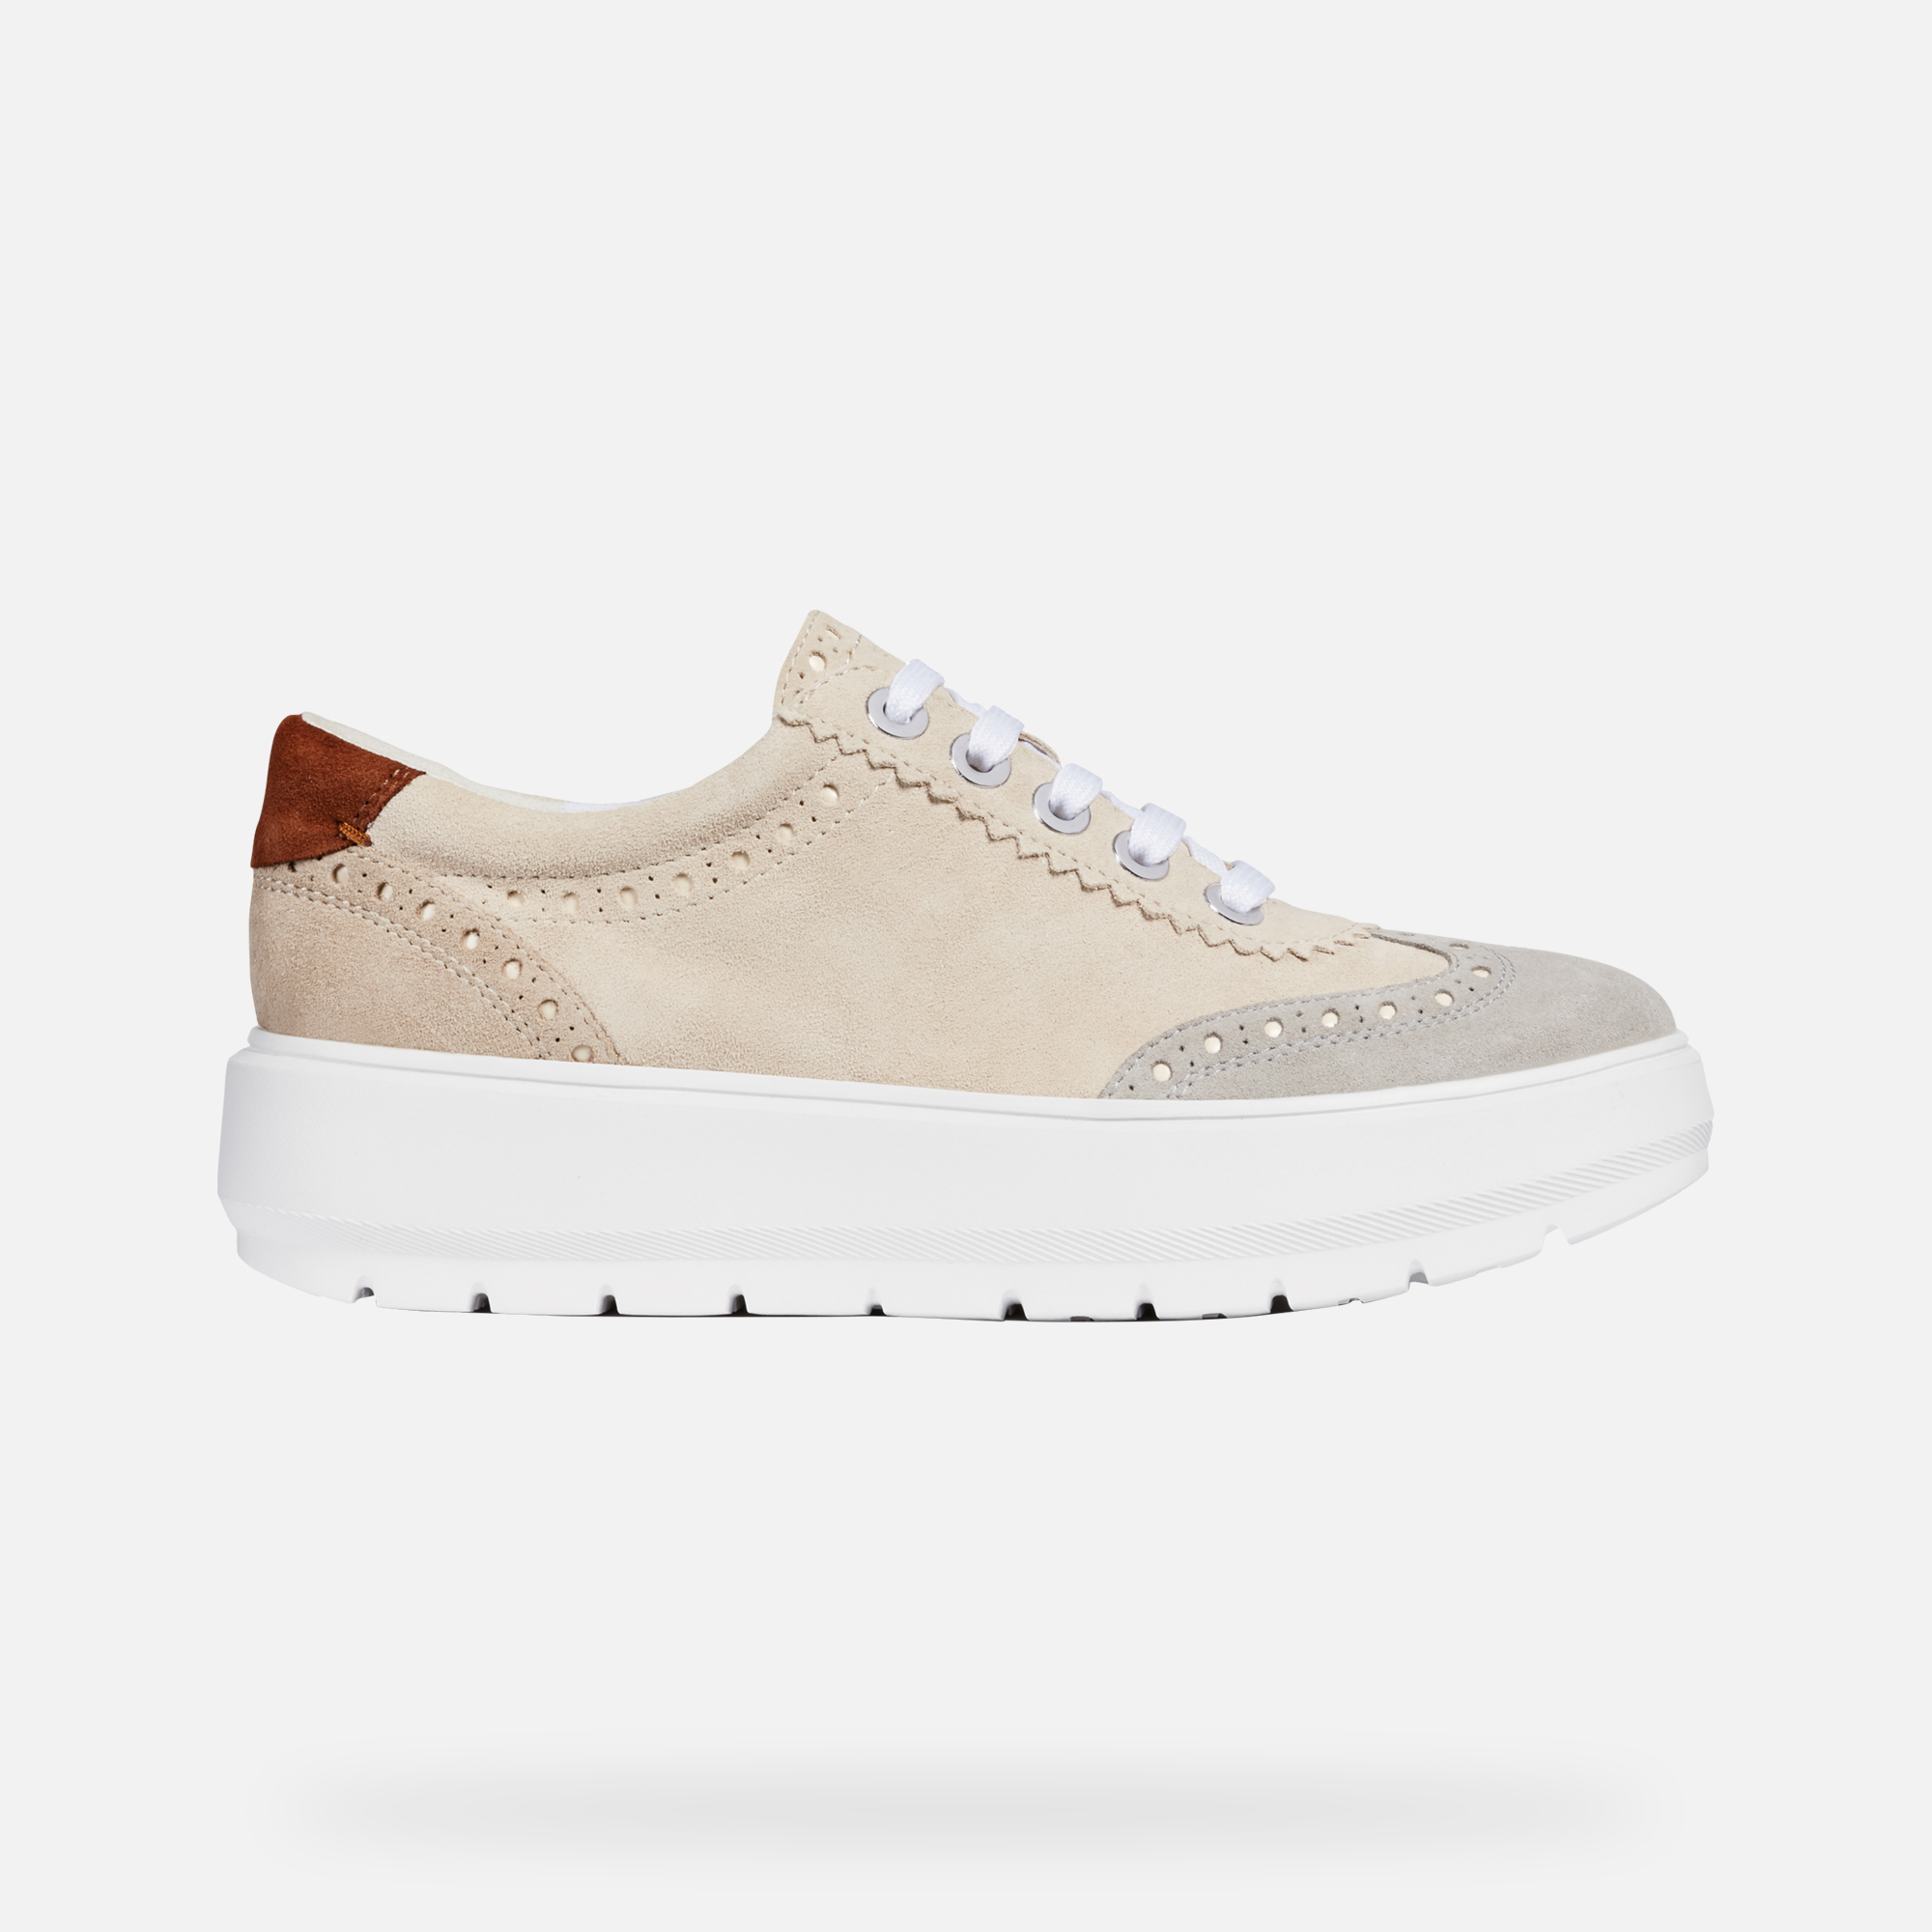 Geox D KAULA: Cream and Light Grey Woman Sneakers | SS19